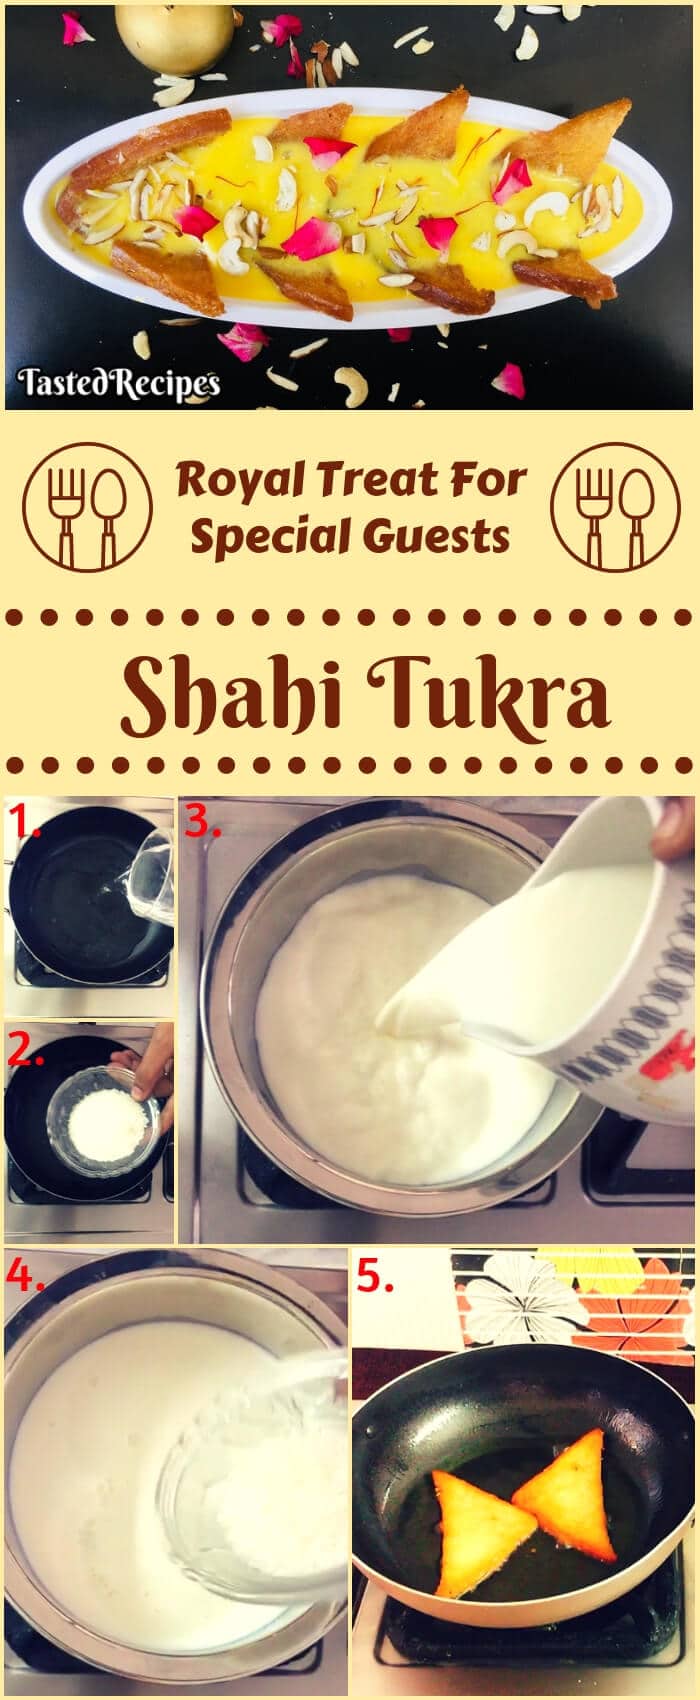 Shahi Tukra Recipe - Royal Indian Bread Pudding | TastedRecipes